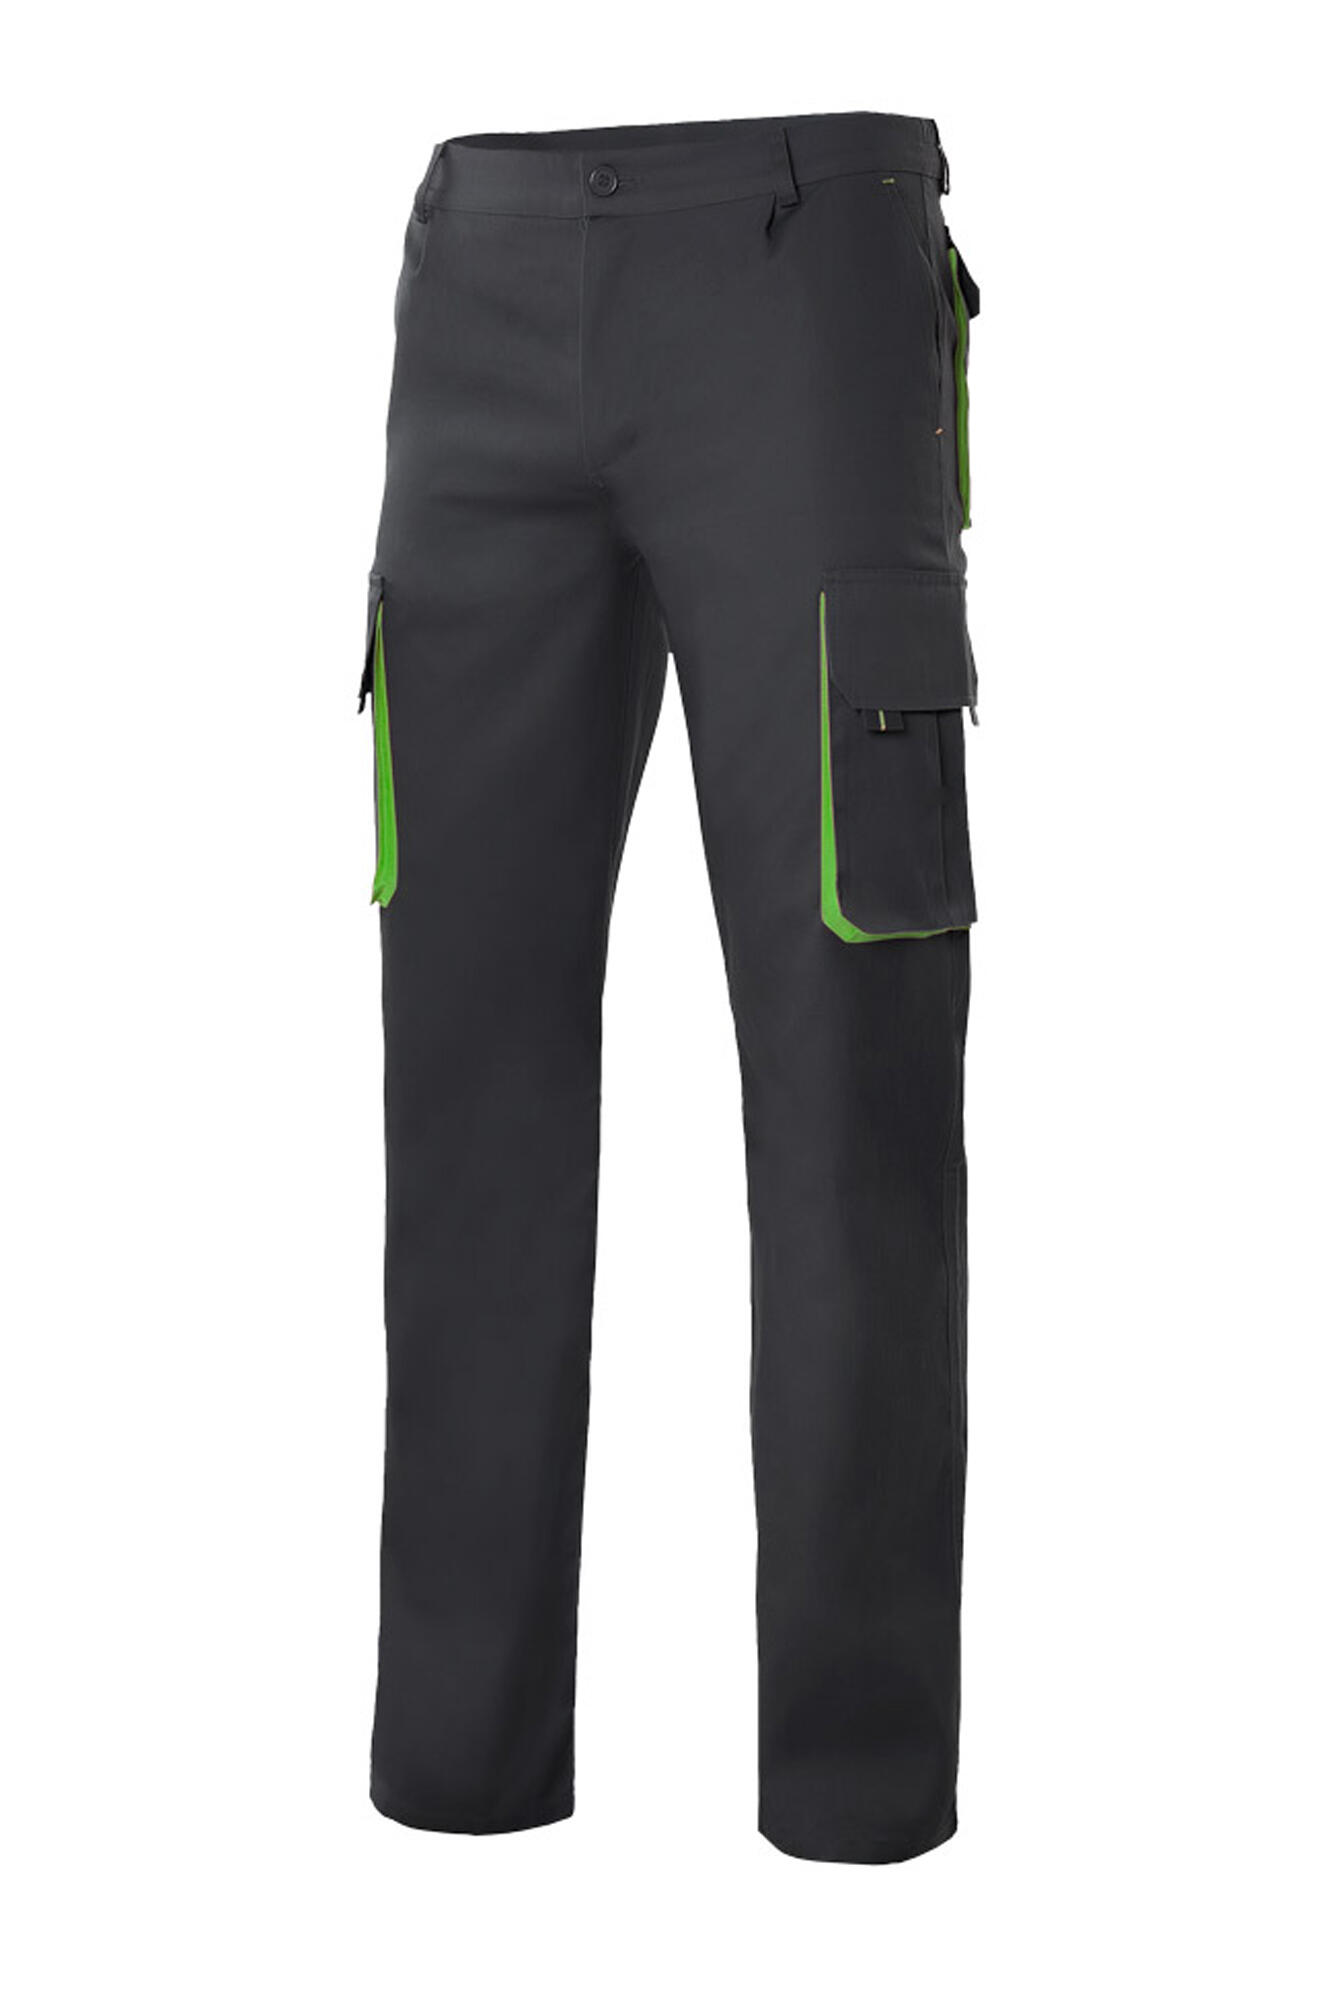 Pantalon de trabajo bicolor multibol negr/verdelima t38